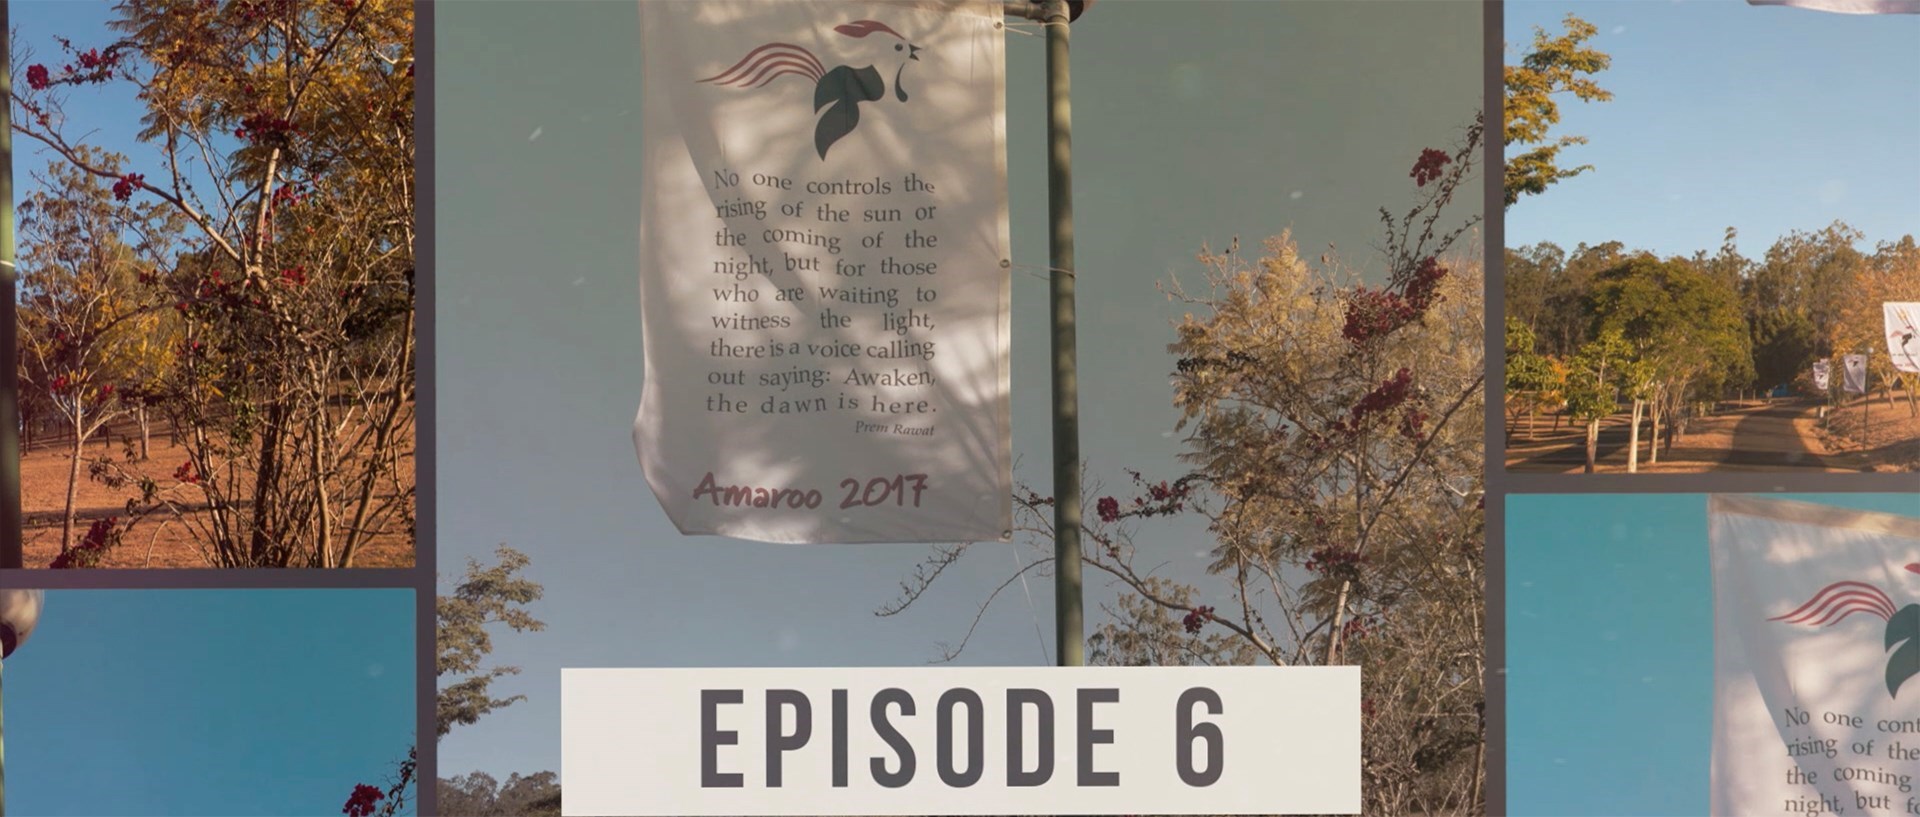 Amaroo 2017 Series Episode 6 Video